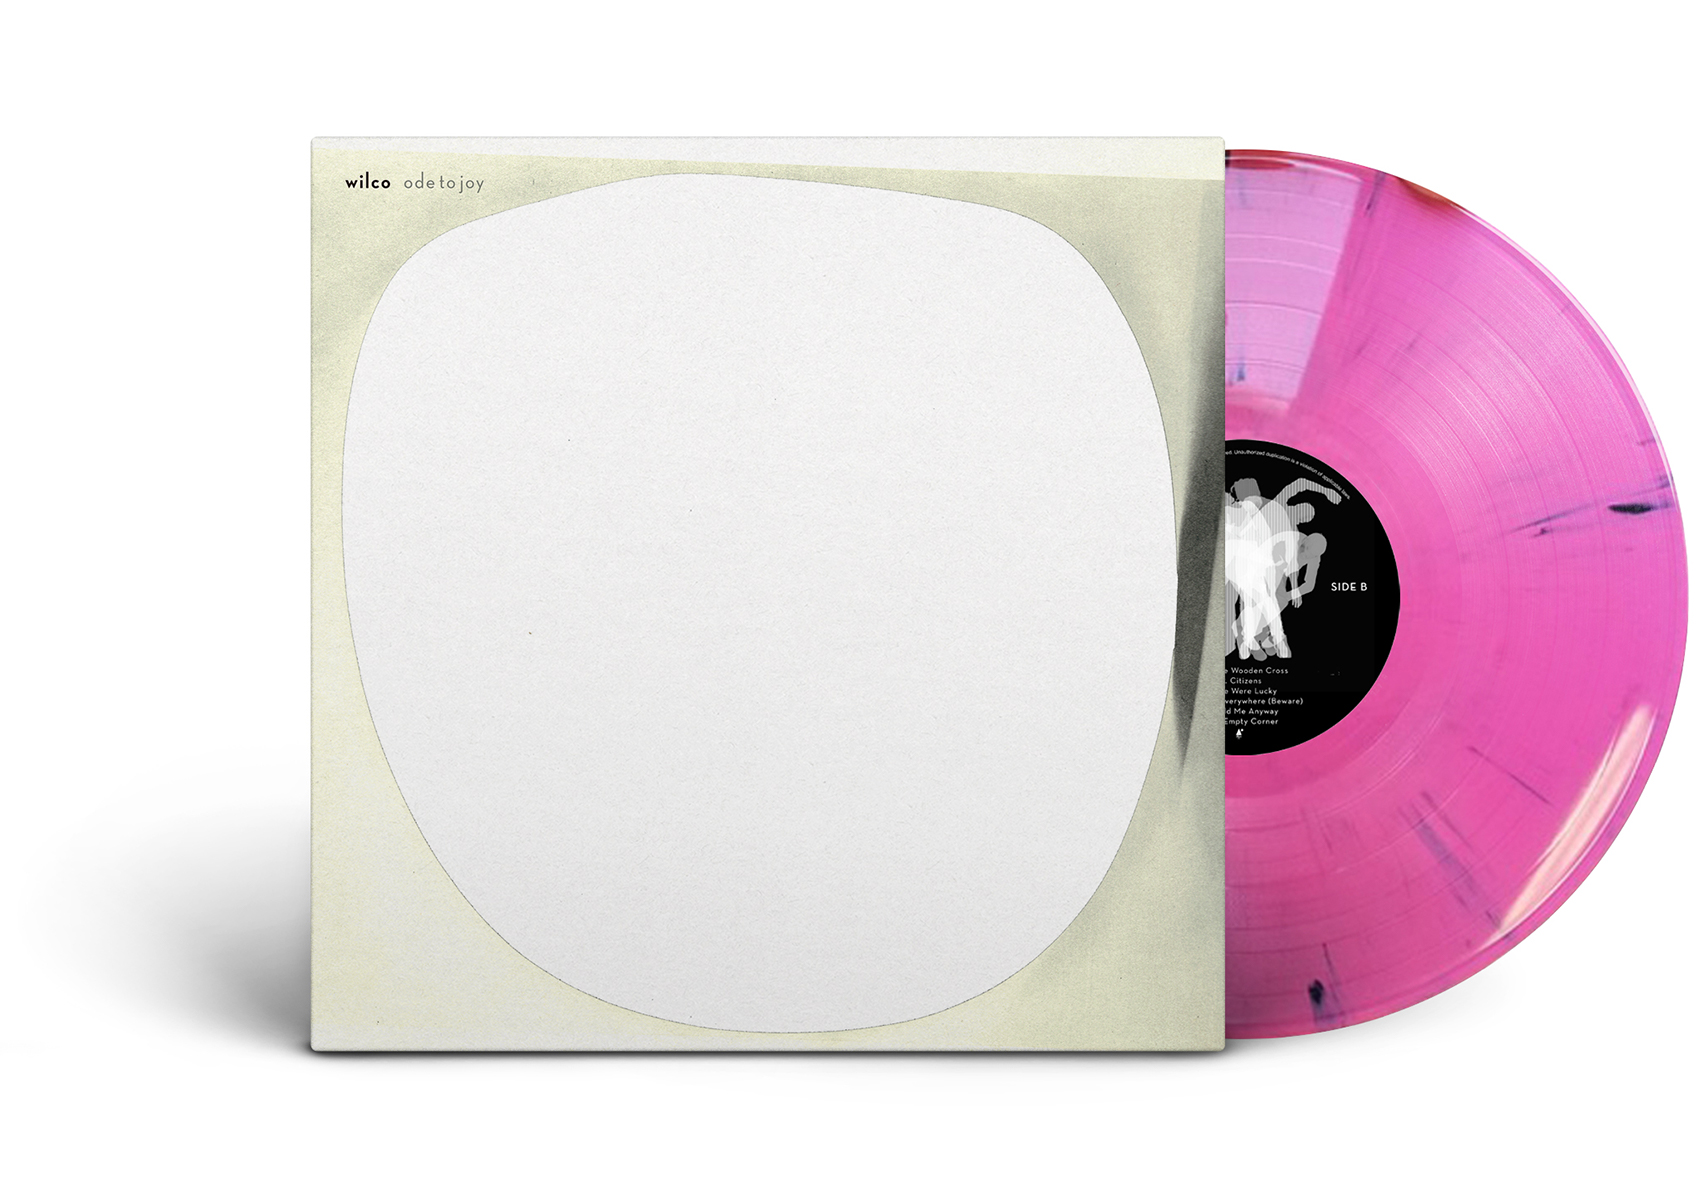 Wilco Ode to Joy - white album cover with pink vinyl record peeking out